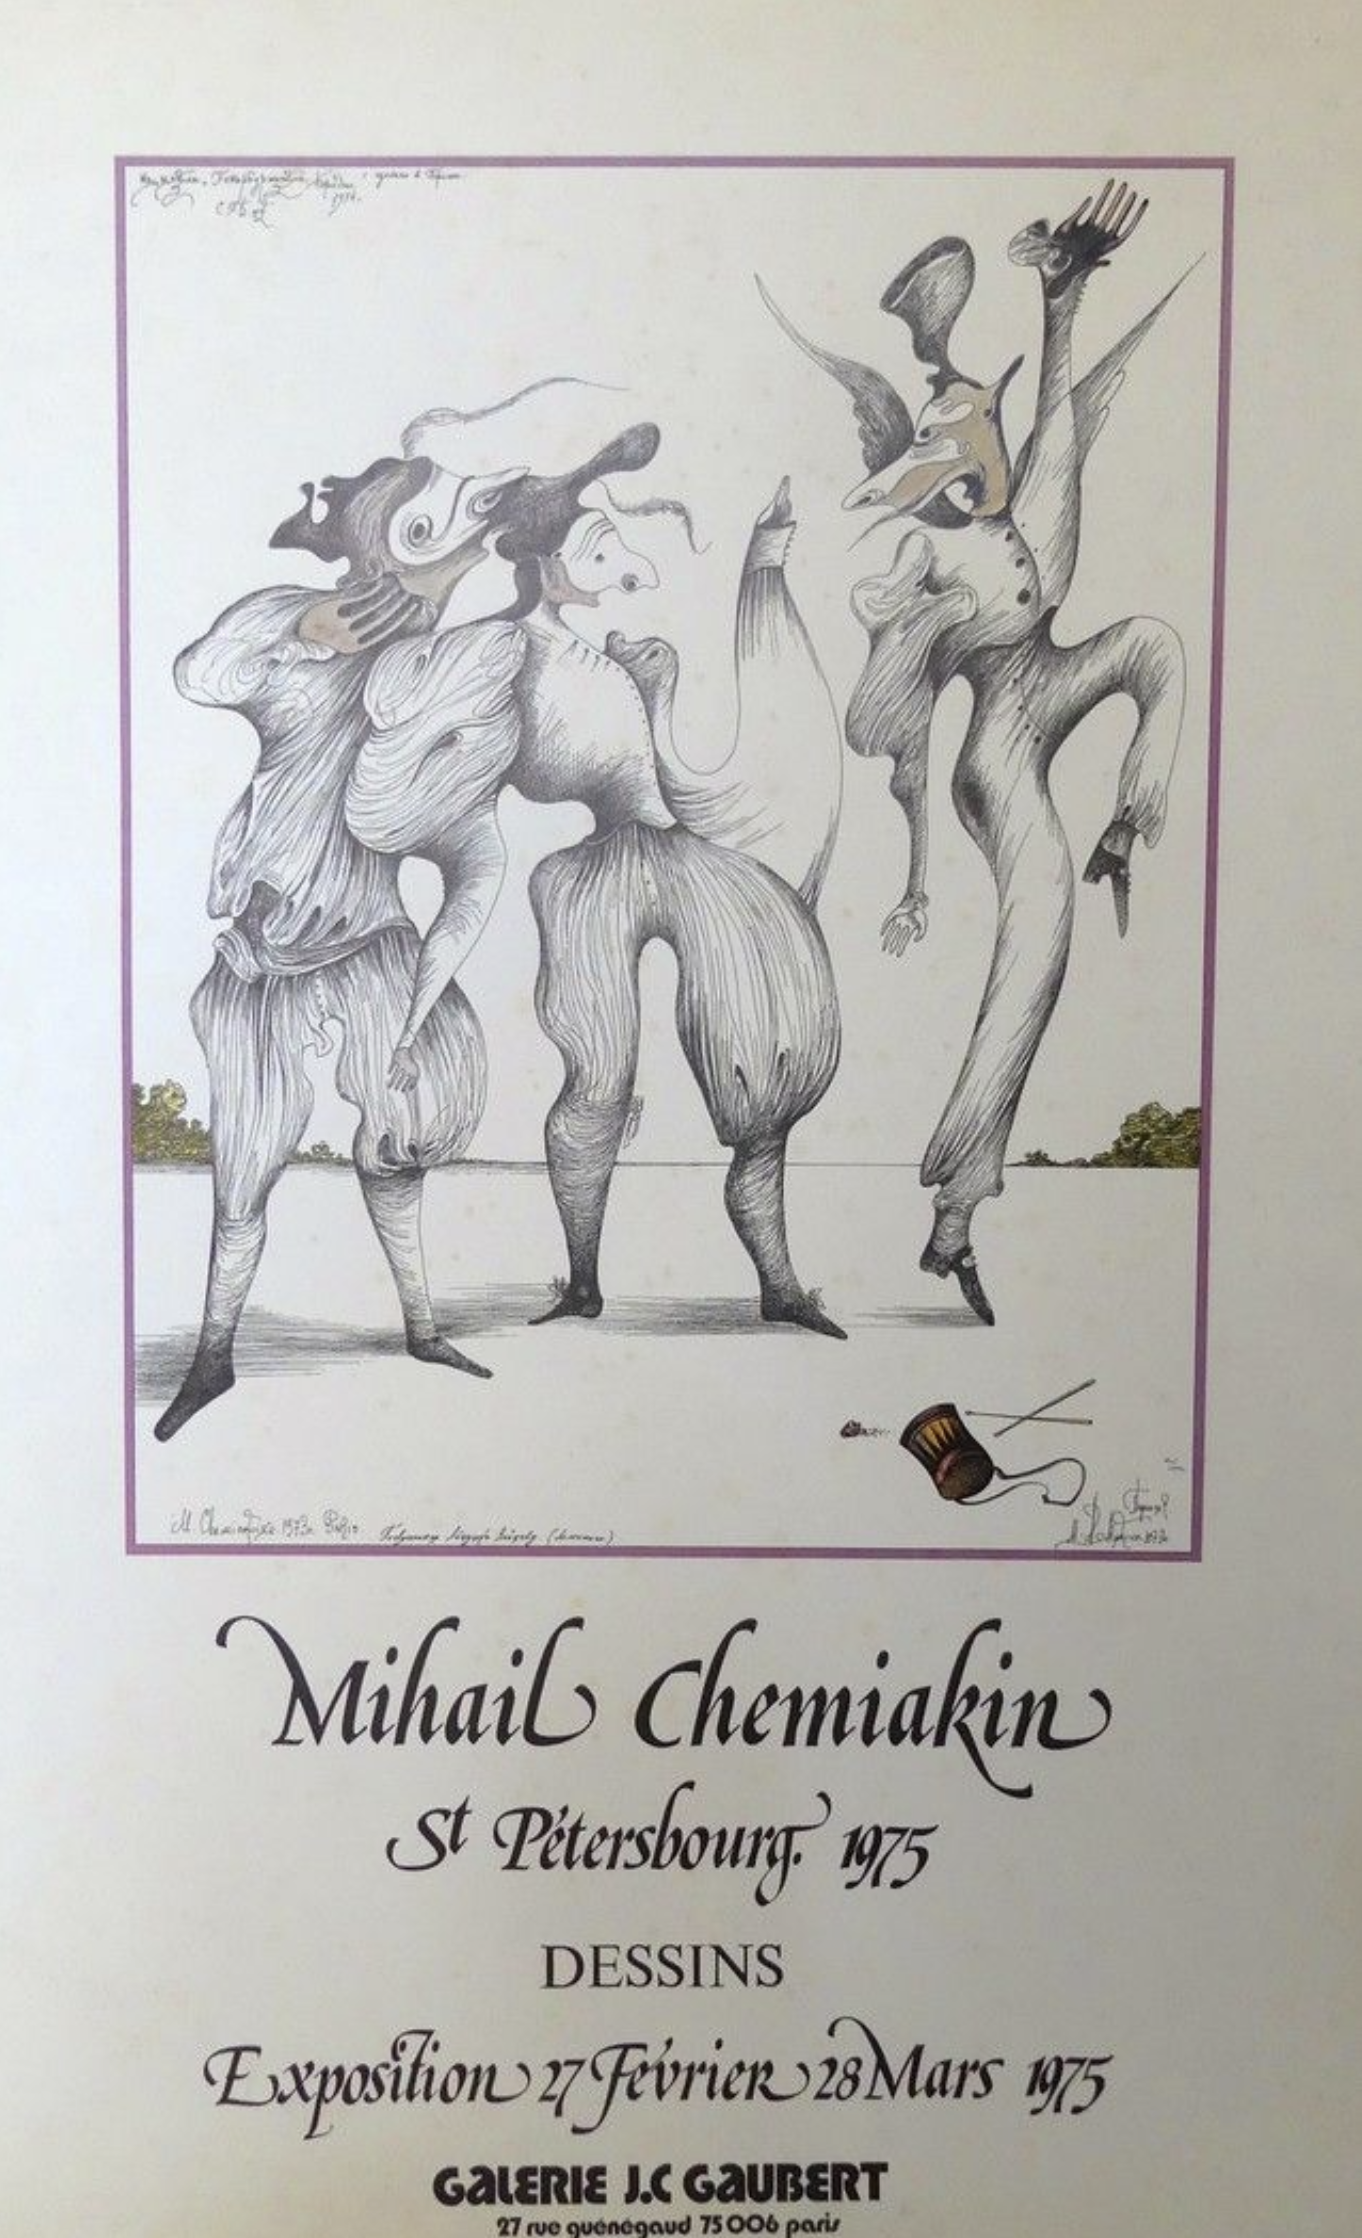 Chemiakin 1975 Original Vintage Poster